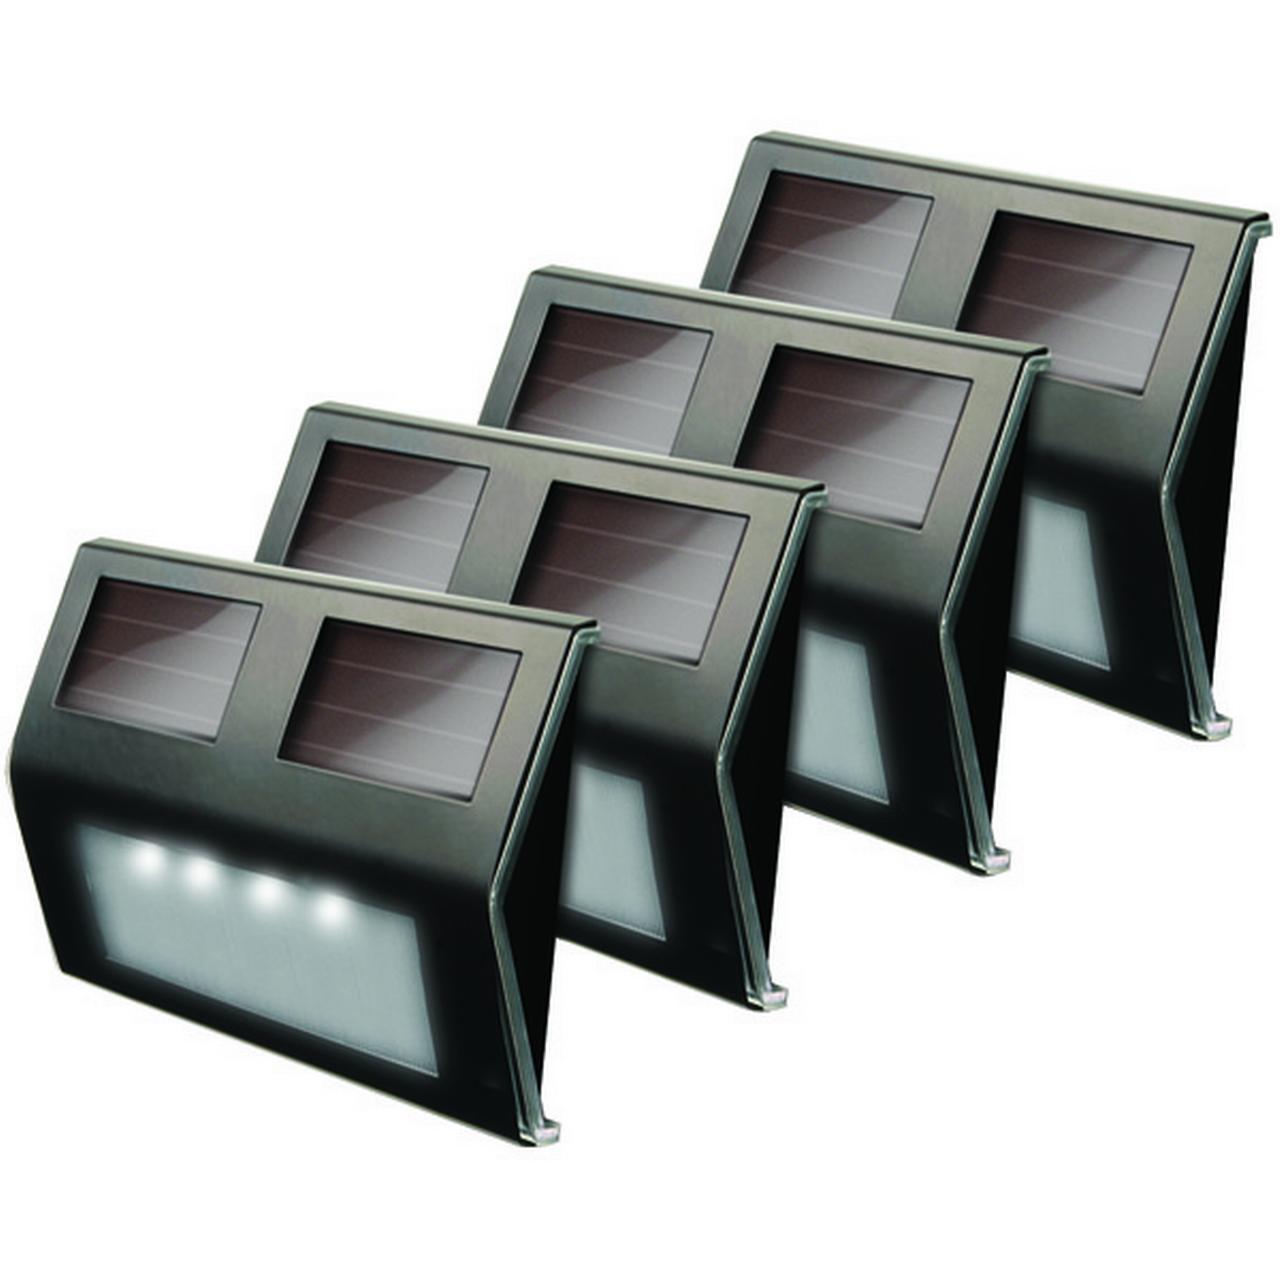 Maxsa Innovations Solar Led Deck Light, 4 Pk (bronze Finish) - image 1 of 1